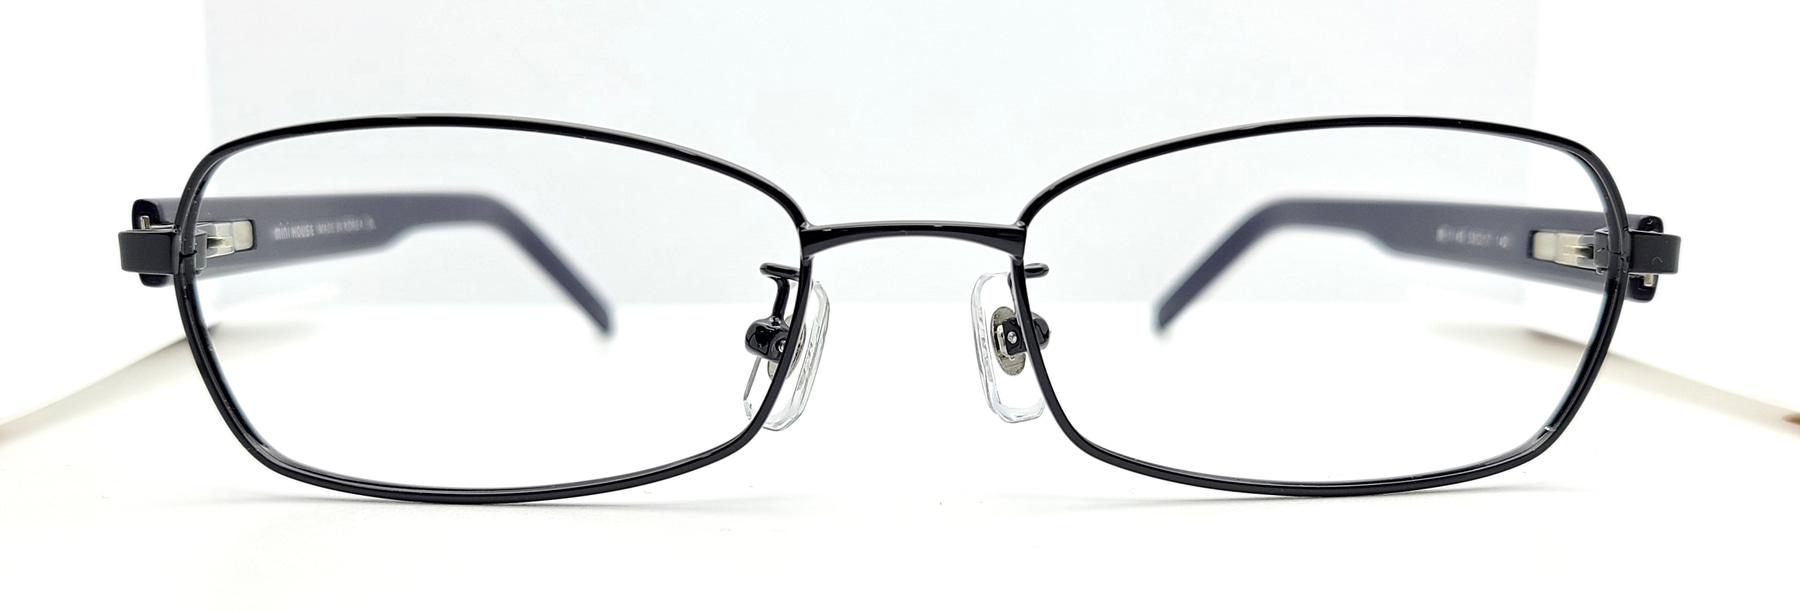 MINIHOUSE M-1145, Korean glasses, sunglasses, eyeglasses, glasses